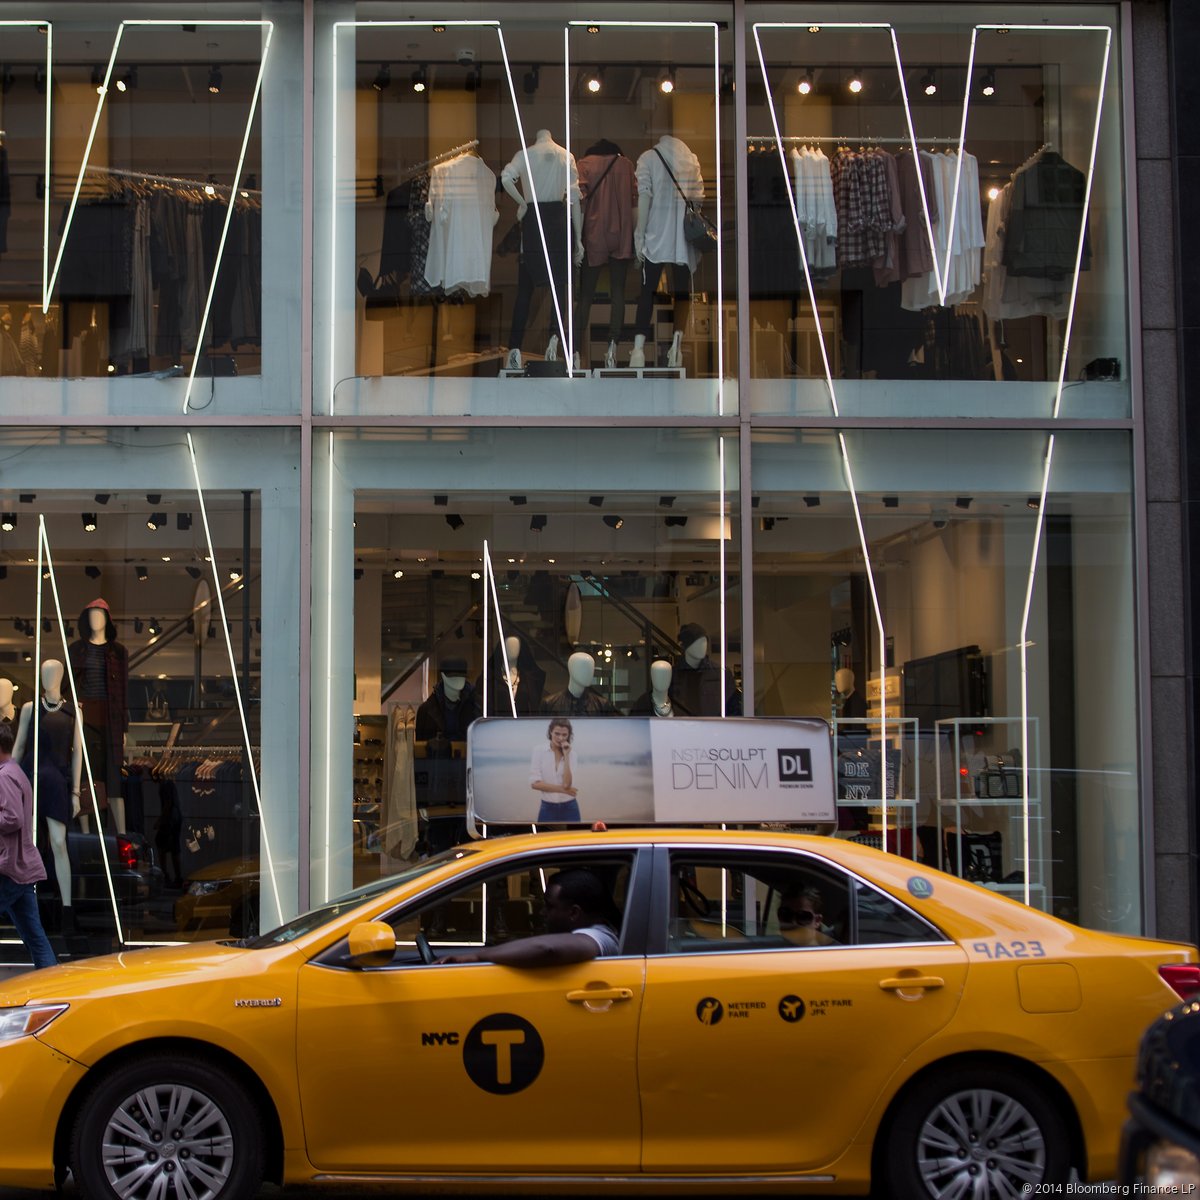 LVMH Sells Donna Karan Brand to G-III for $650 Million - WSJ